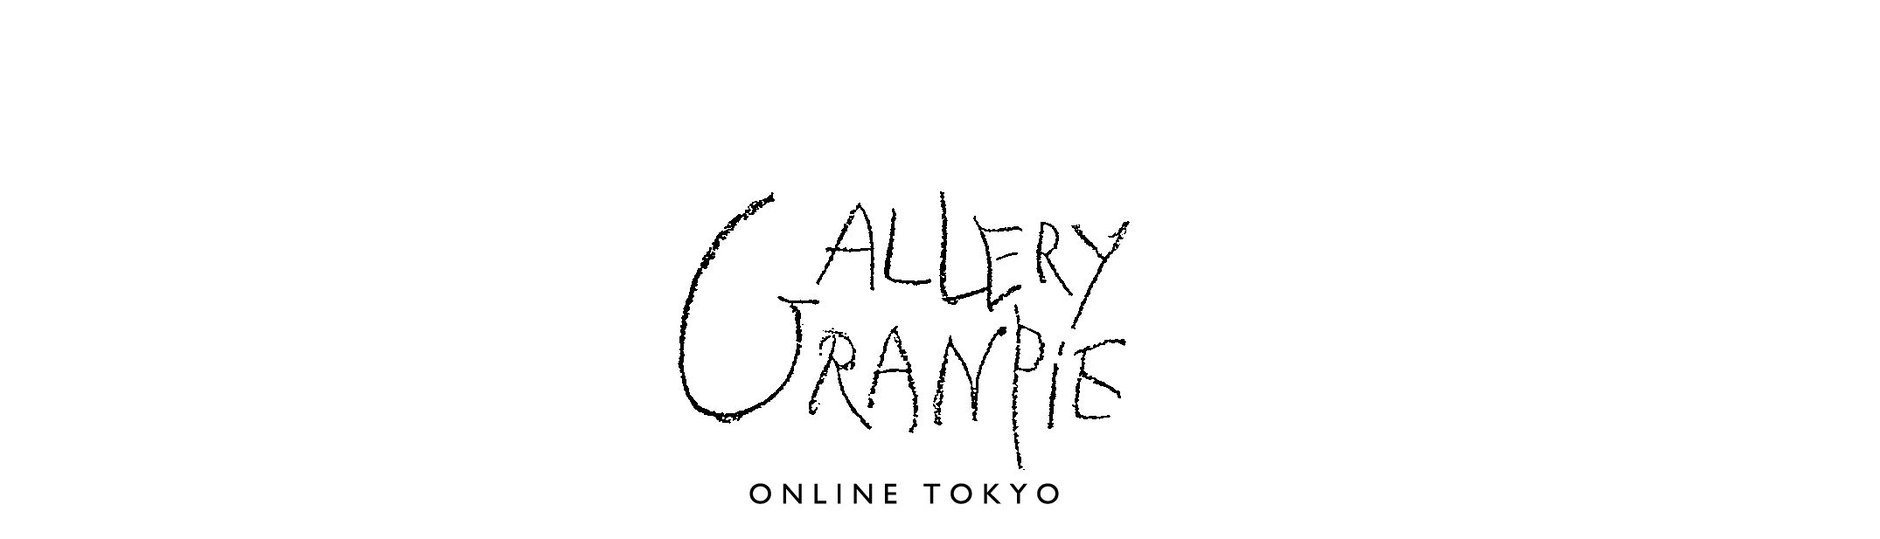 GALLERY GRANPIE online Tokyo